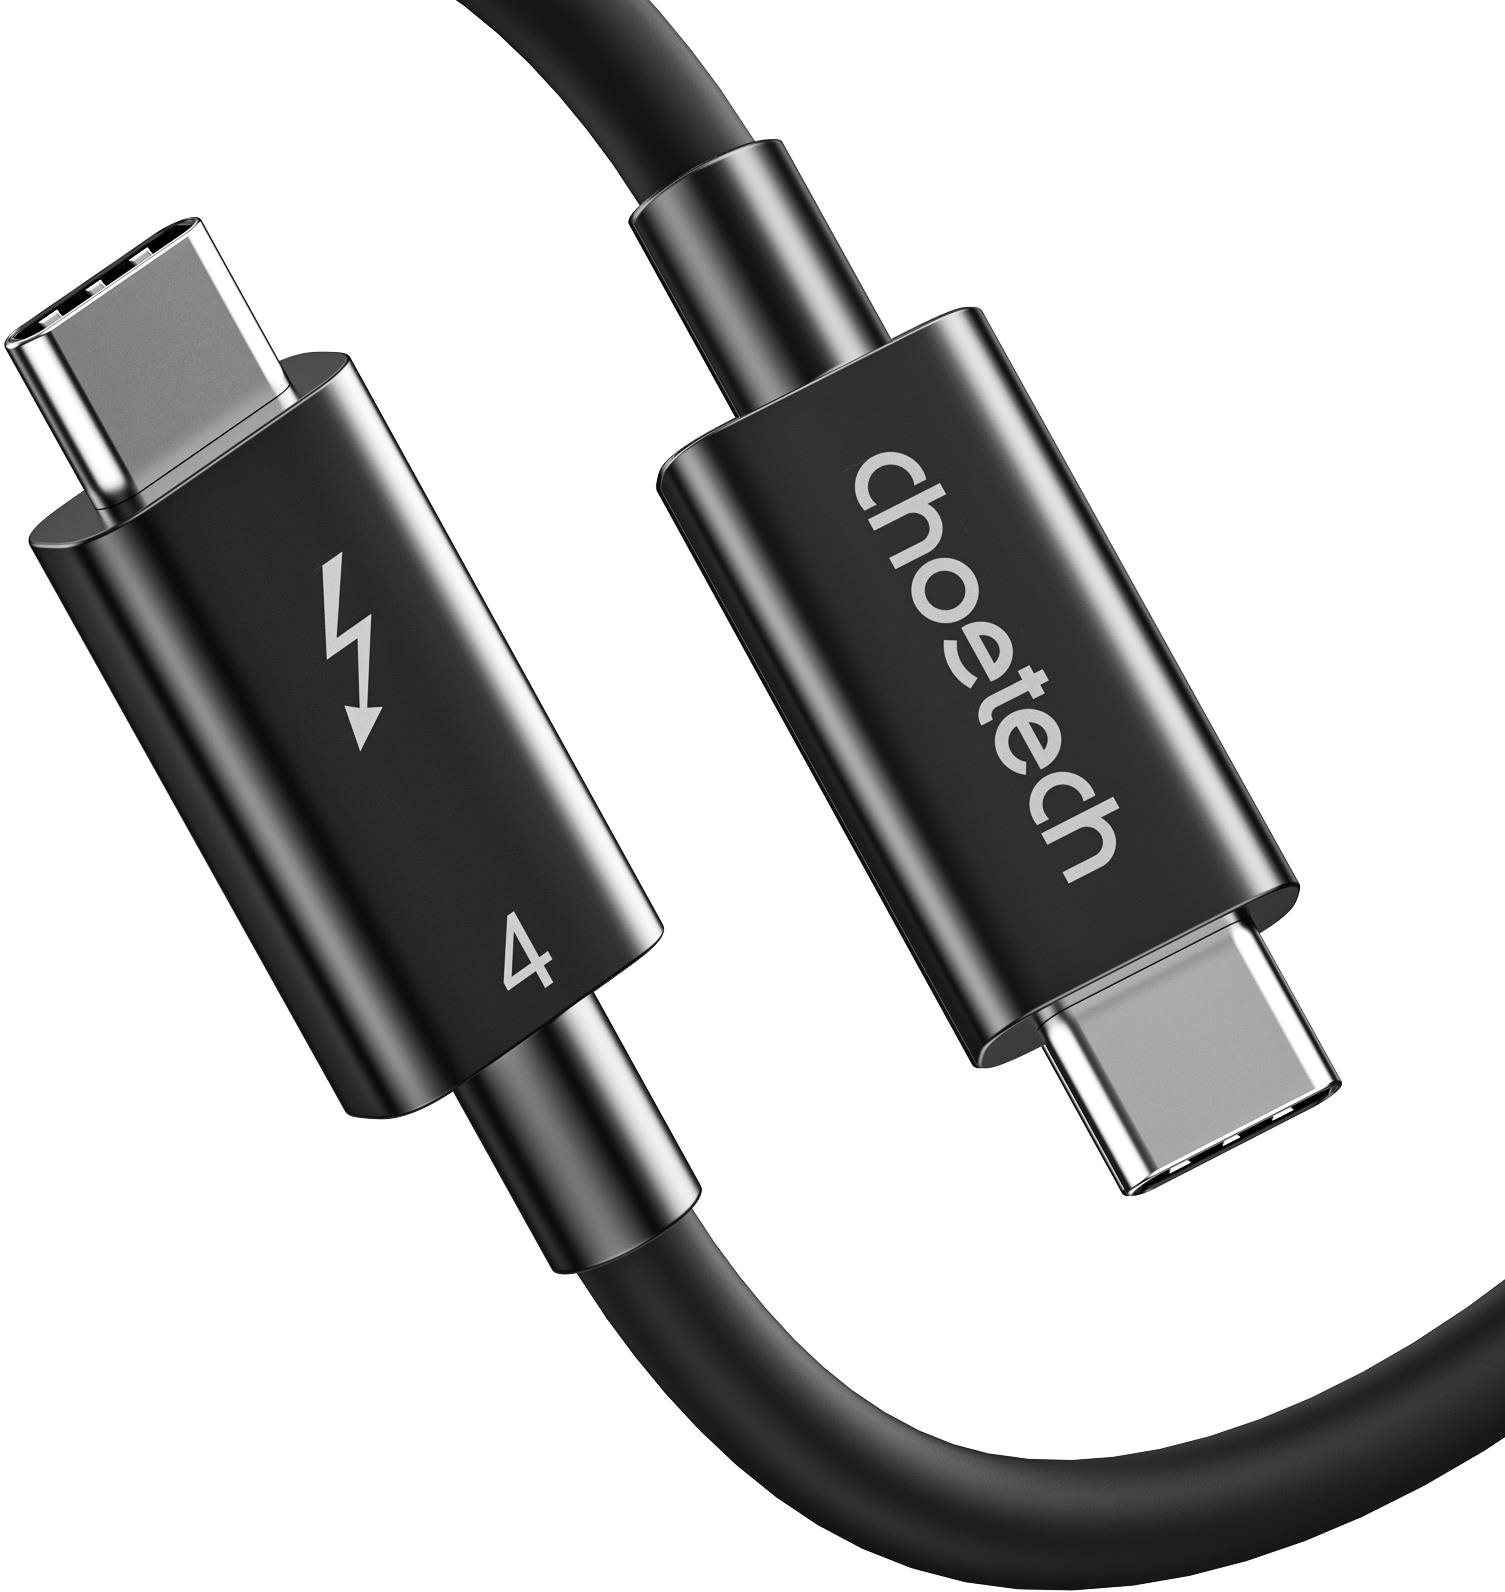 Adatkábel ChoeTech Thunderbolt 4 USB-C 40Gbps Cable 0.8m Black